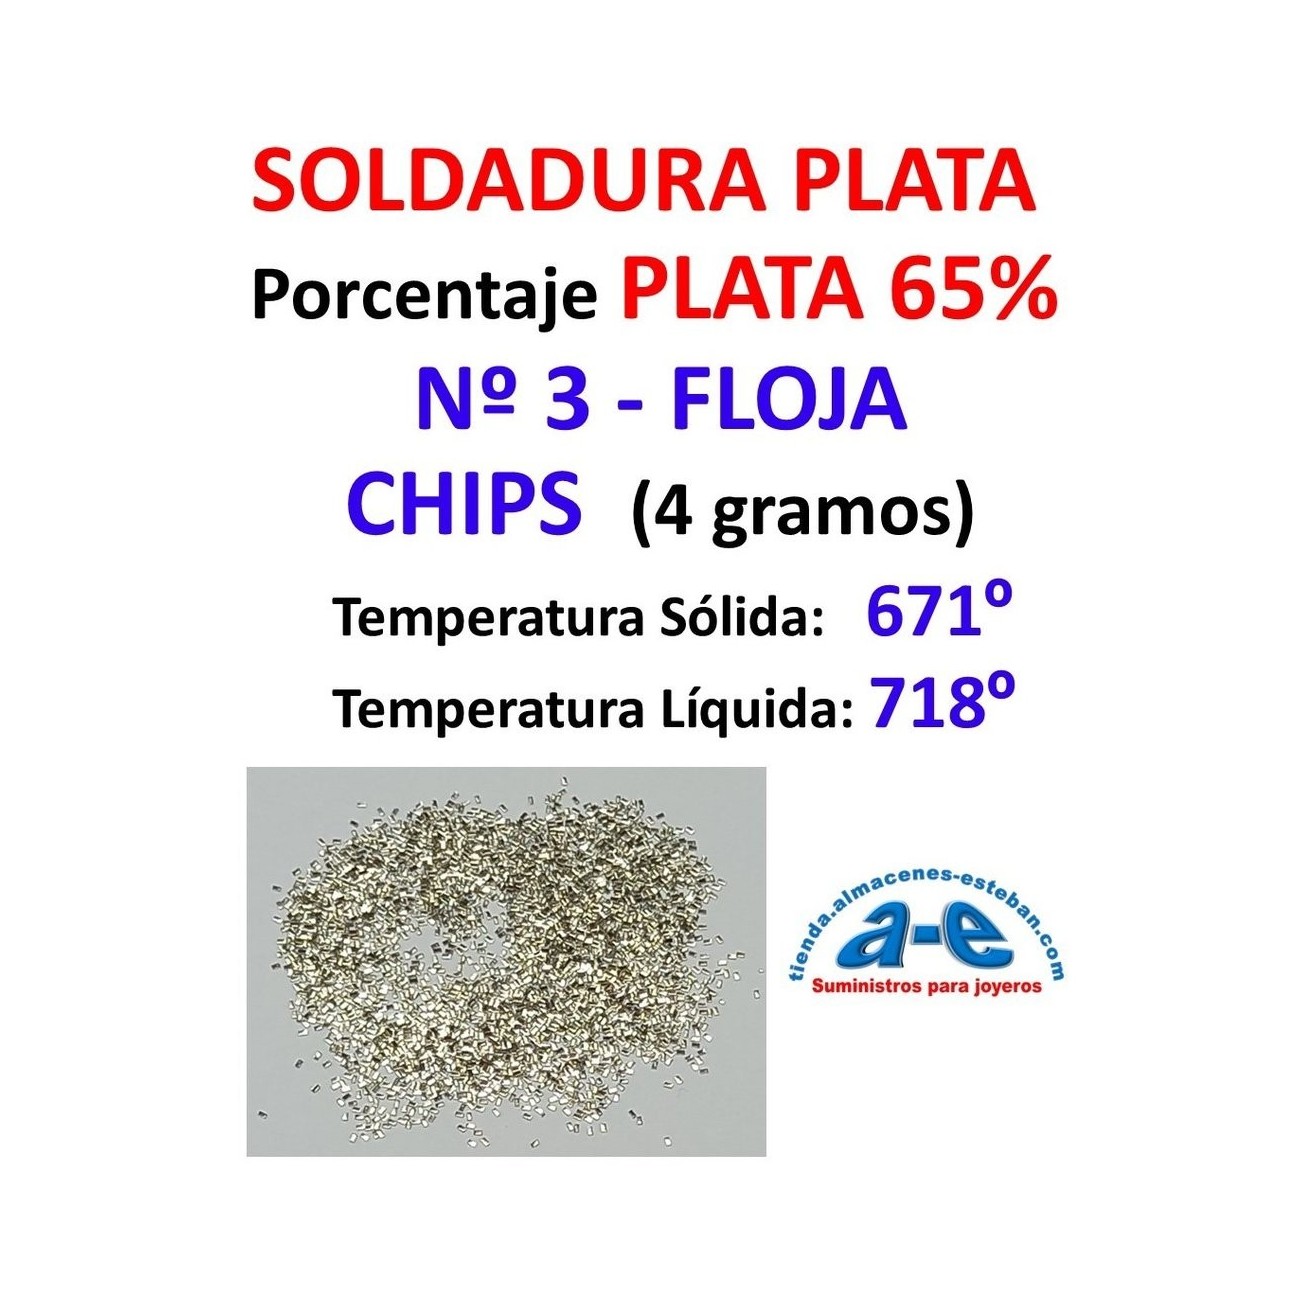 SOLDADURA PLATA N. 3 FLOJA USA CHIPS